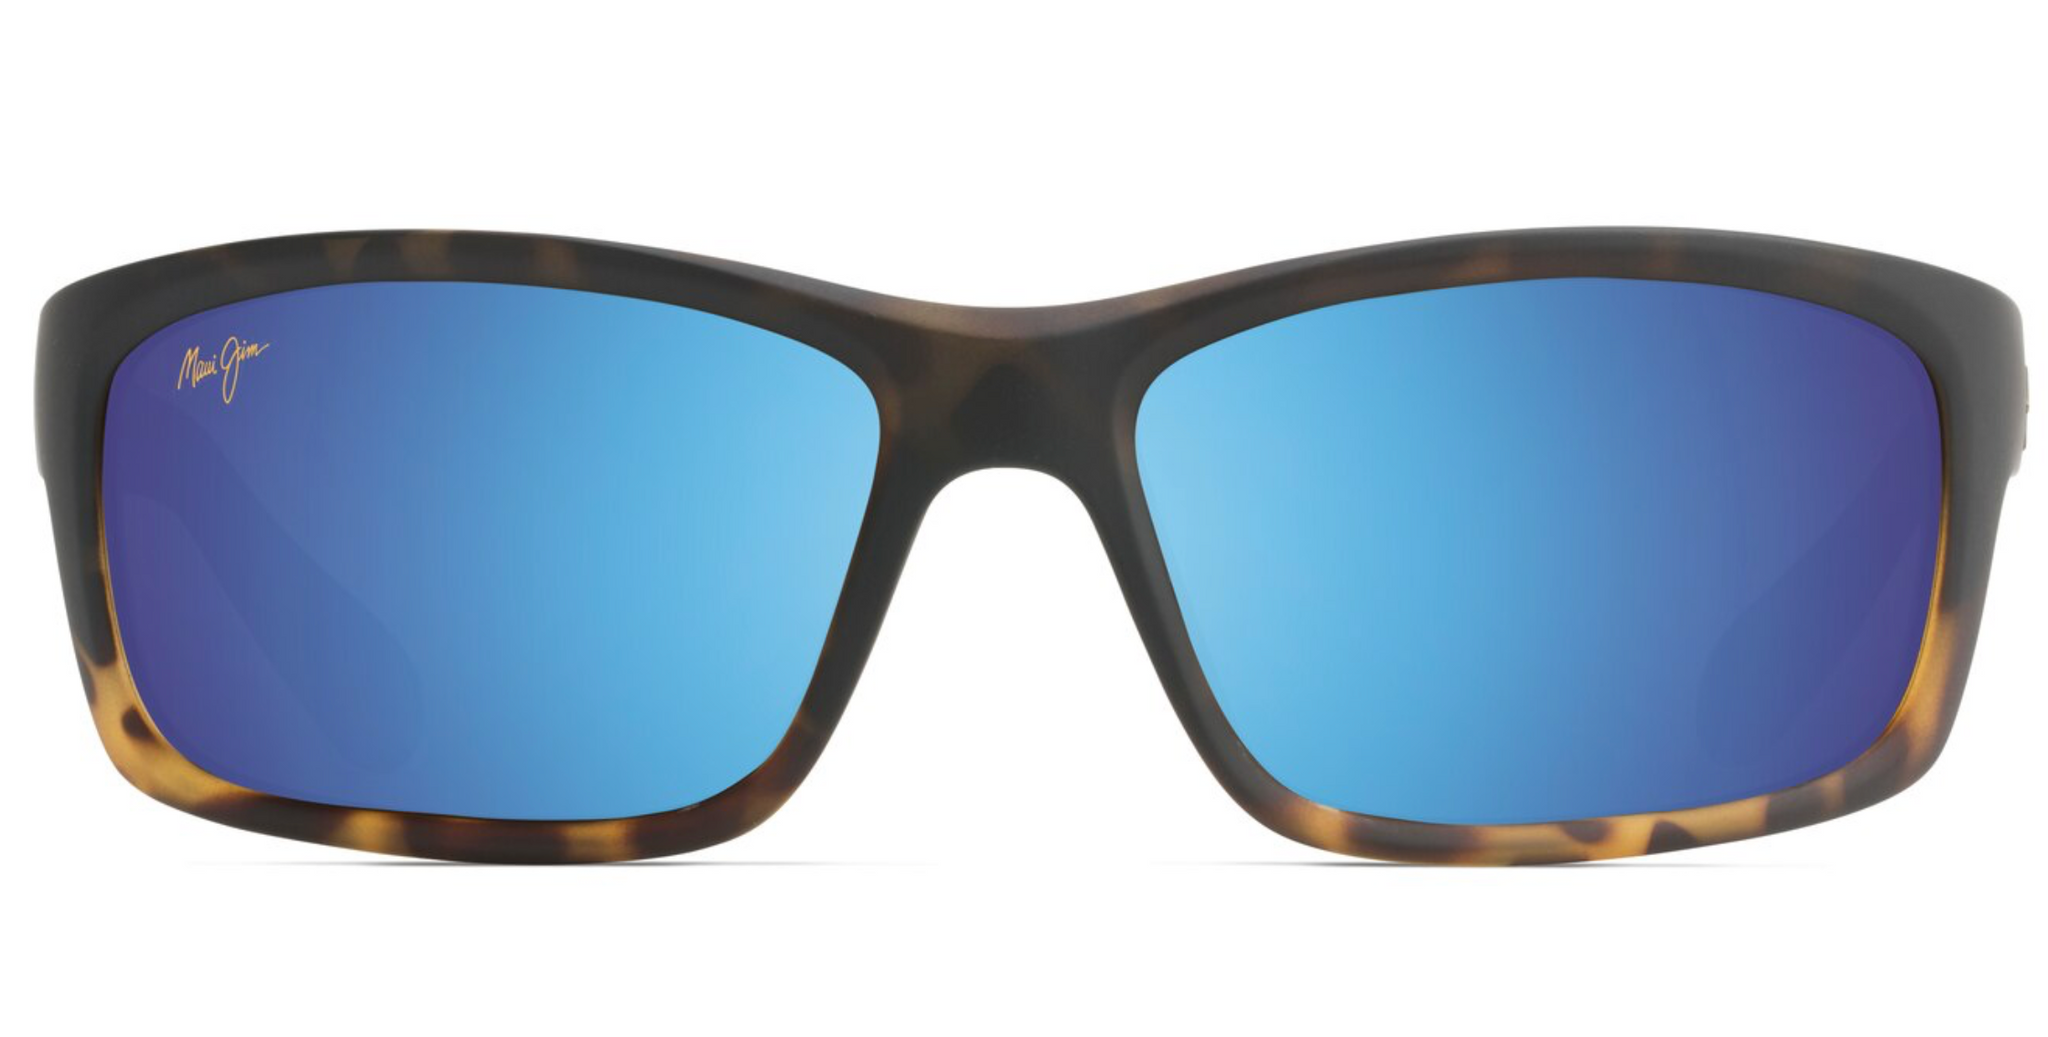 Jim Coast 766 Matte Tortoise Ombre with Blue Hawaii lenses - Flight Sunglasses